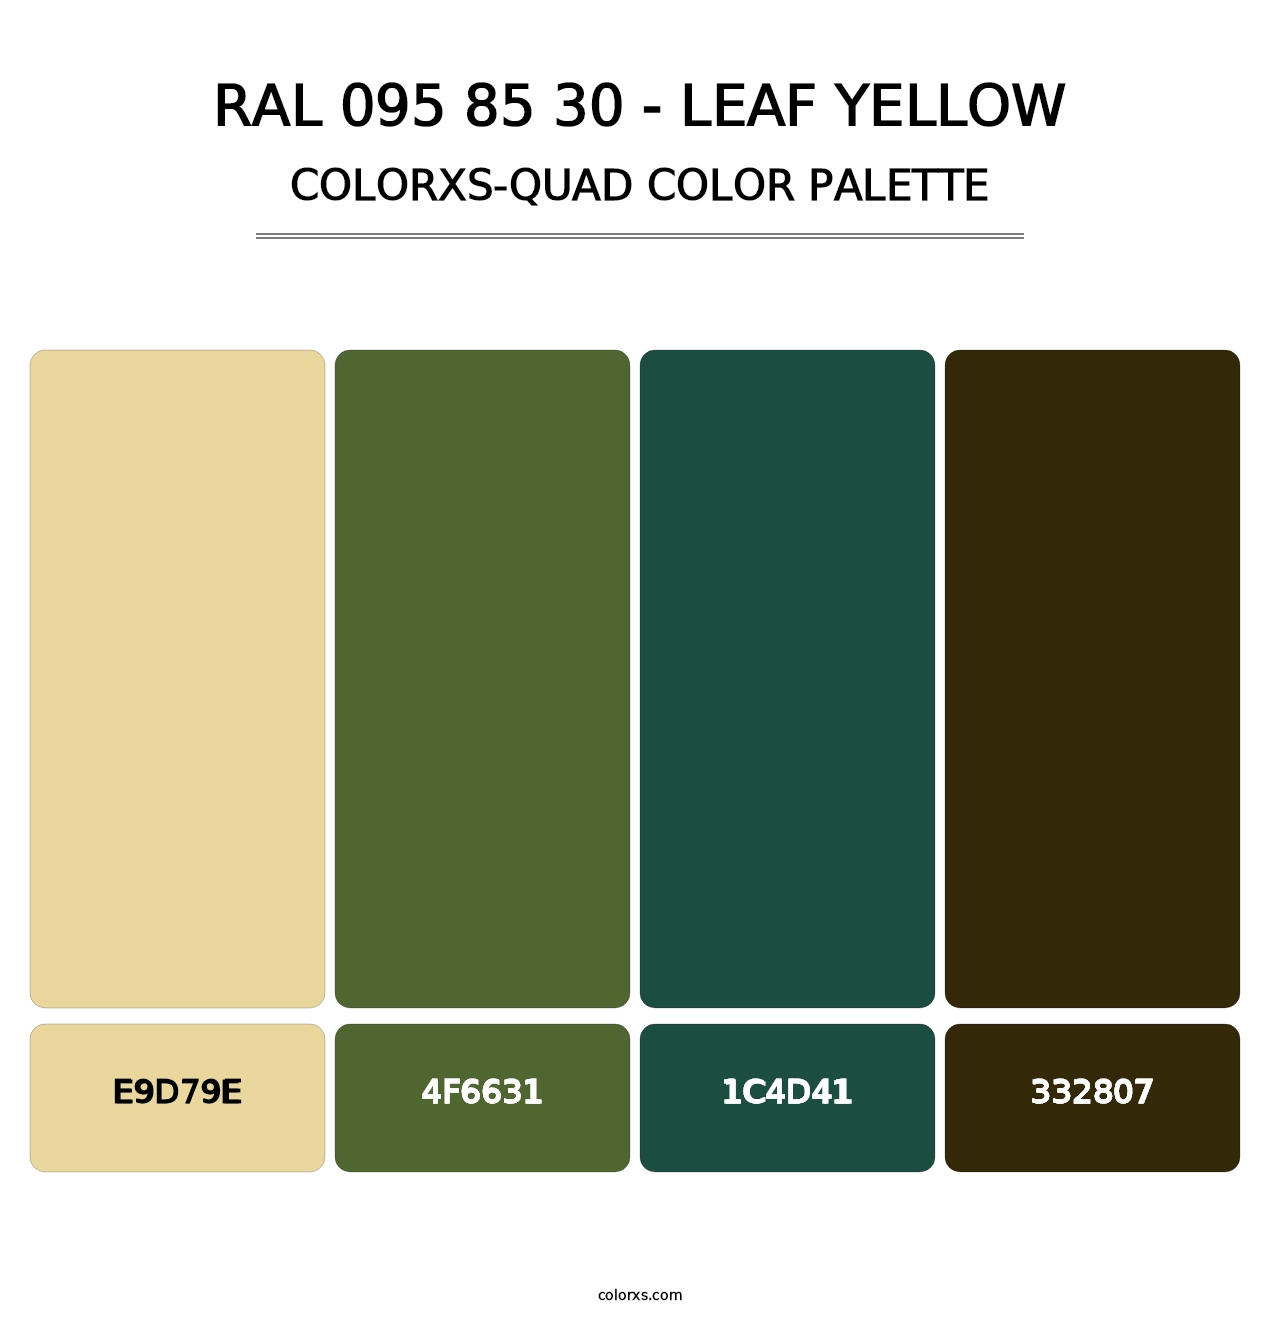 RAL 095 85 30 - Leaf Yellow - Colorxs Quad Palette